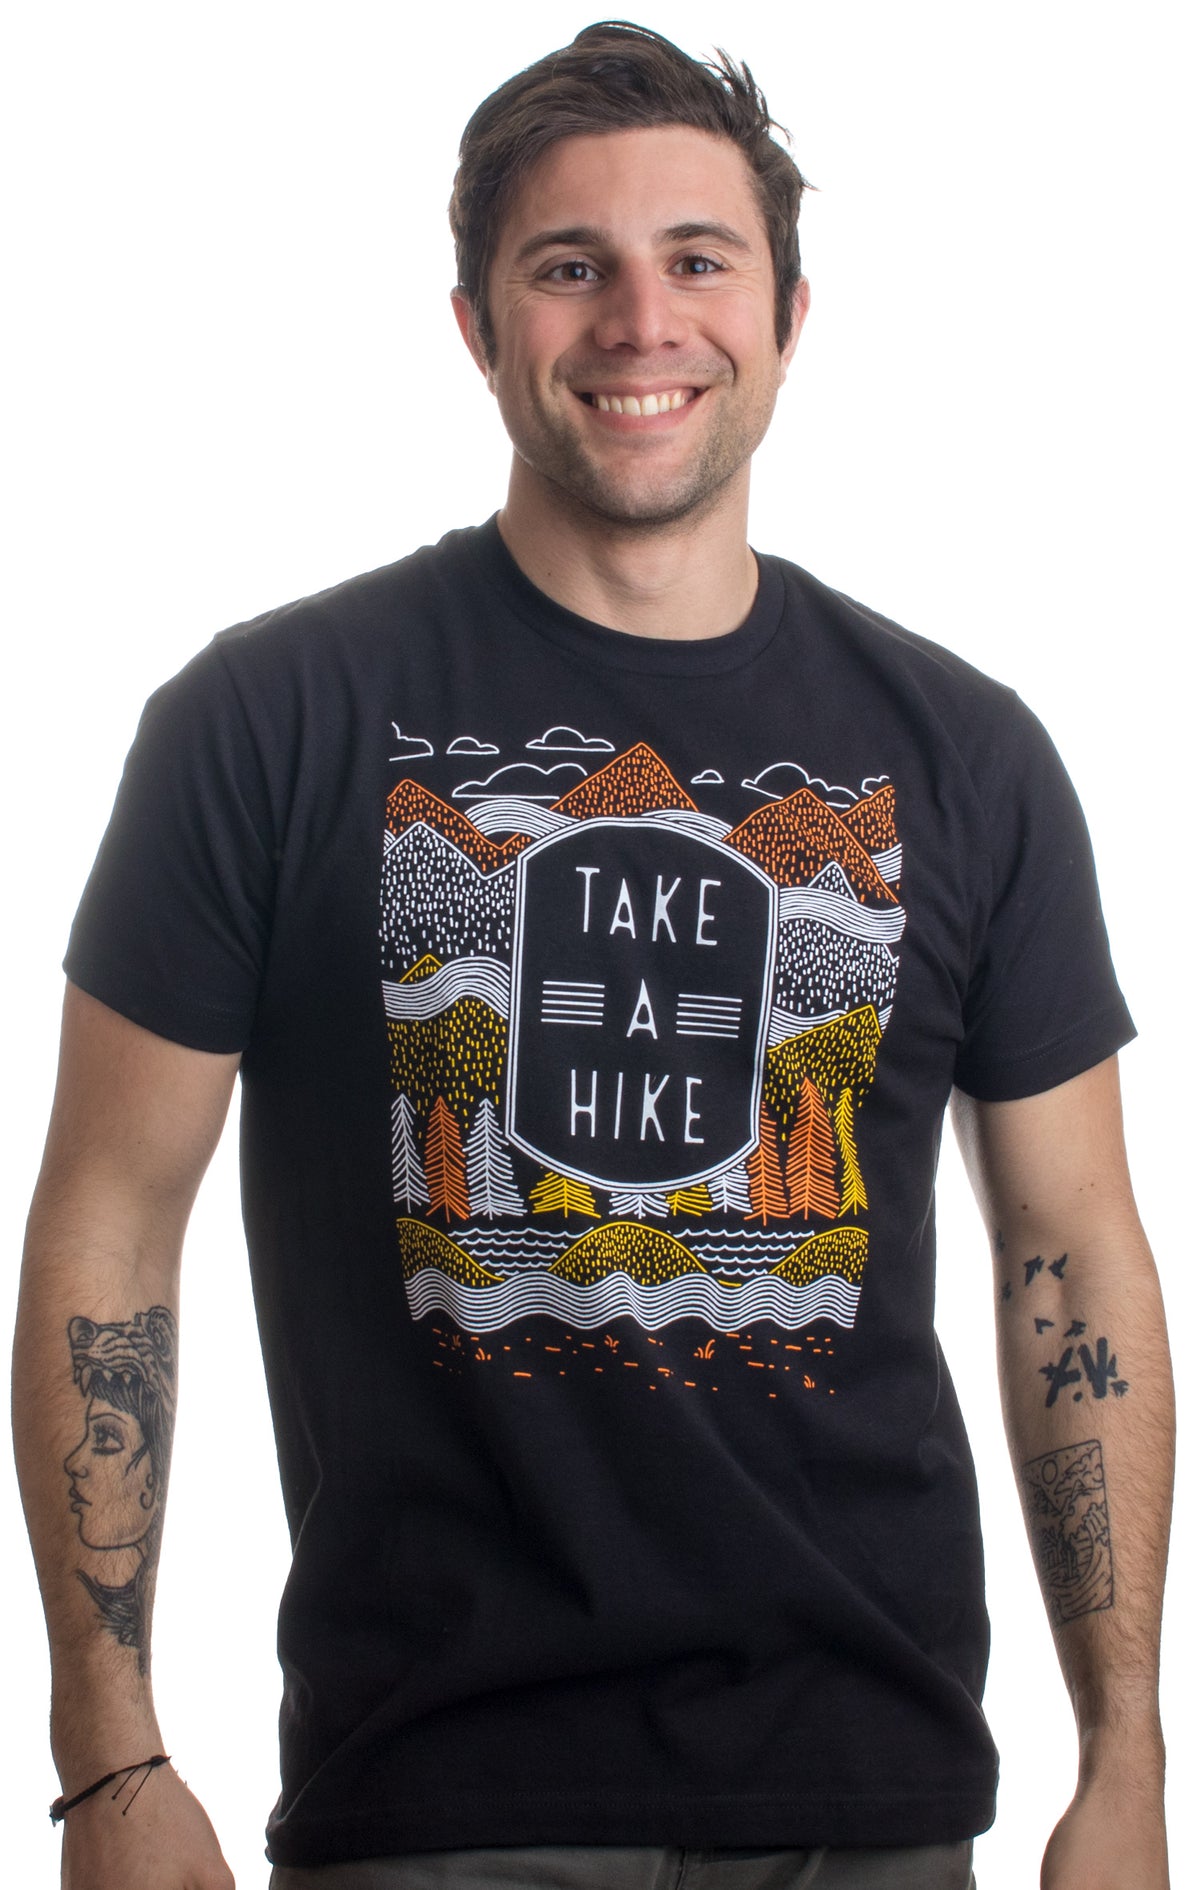 Take a Hike | Outdoor Nature Hiking Camping Graphic Saying for Men Women T-shirt